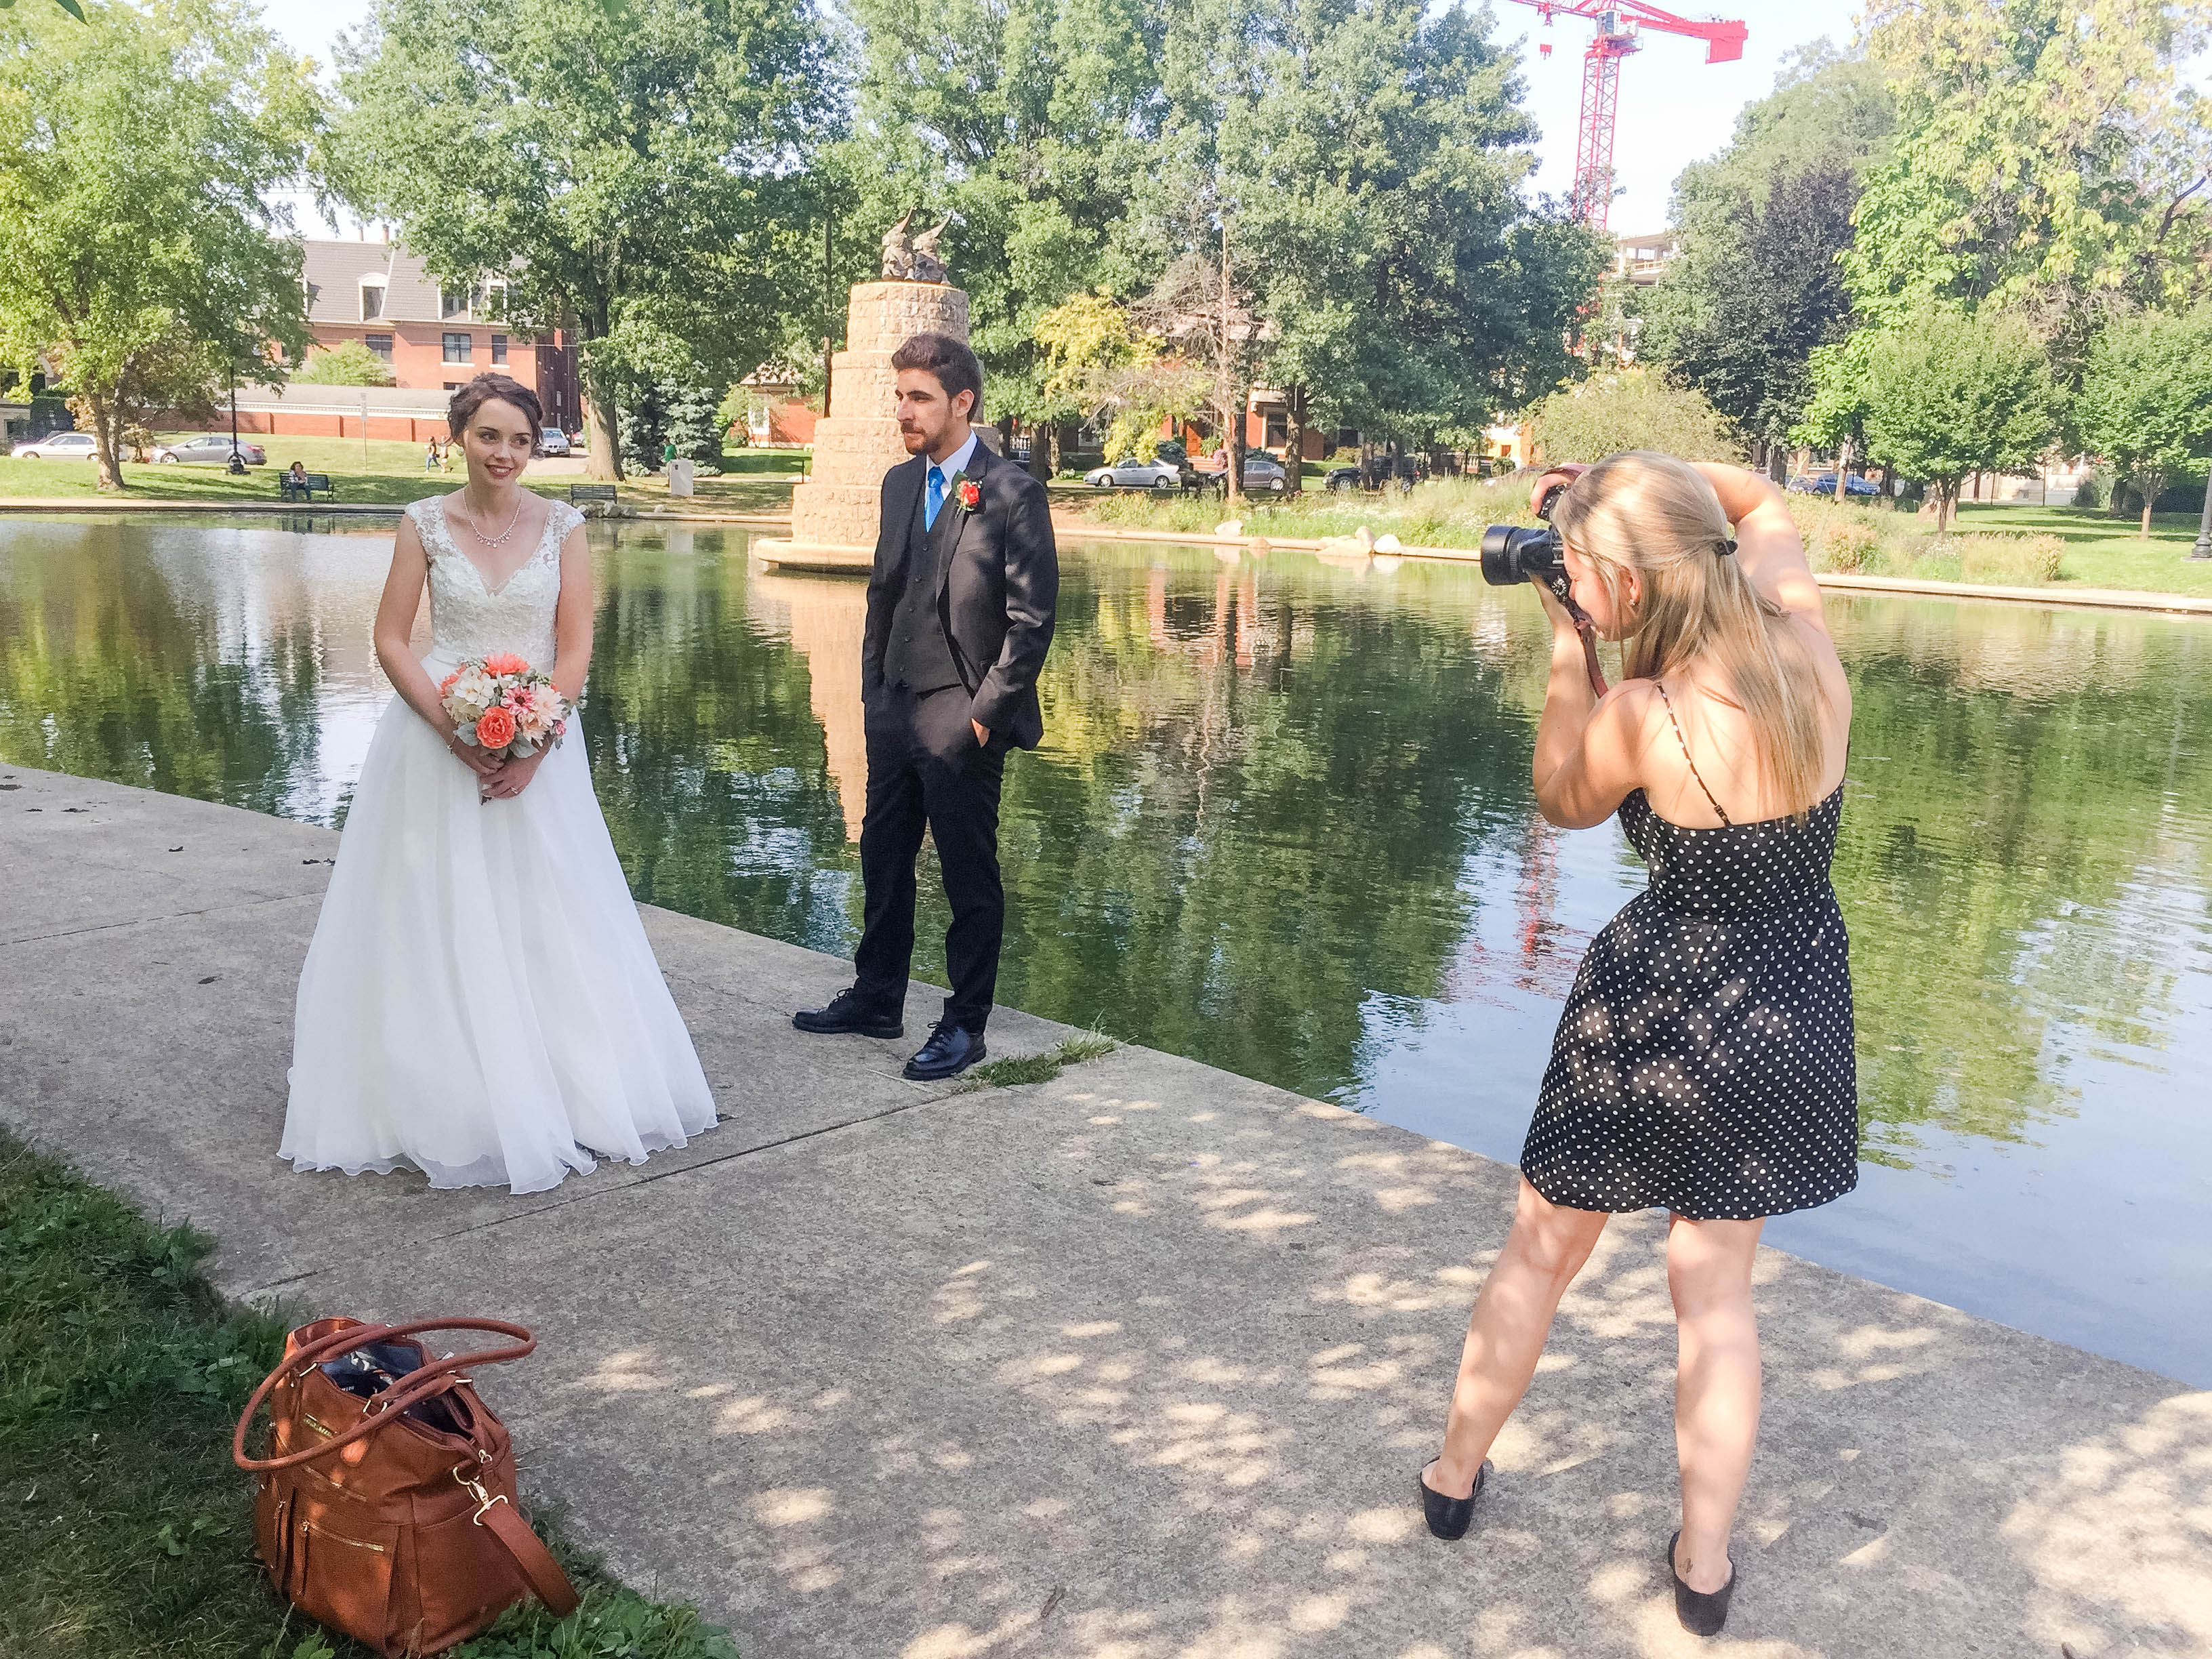 Sweet Williams Photography Behind The Scenes 2017 Wedding Season, Columbus Ohio Wedding Photographer